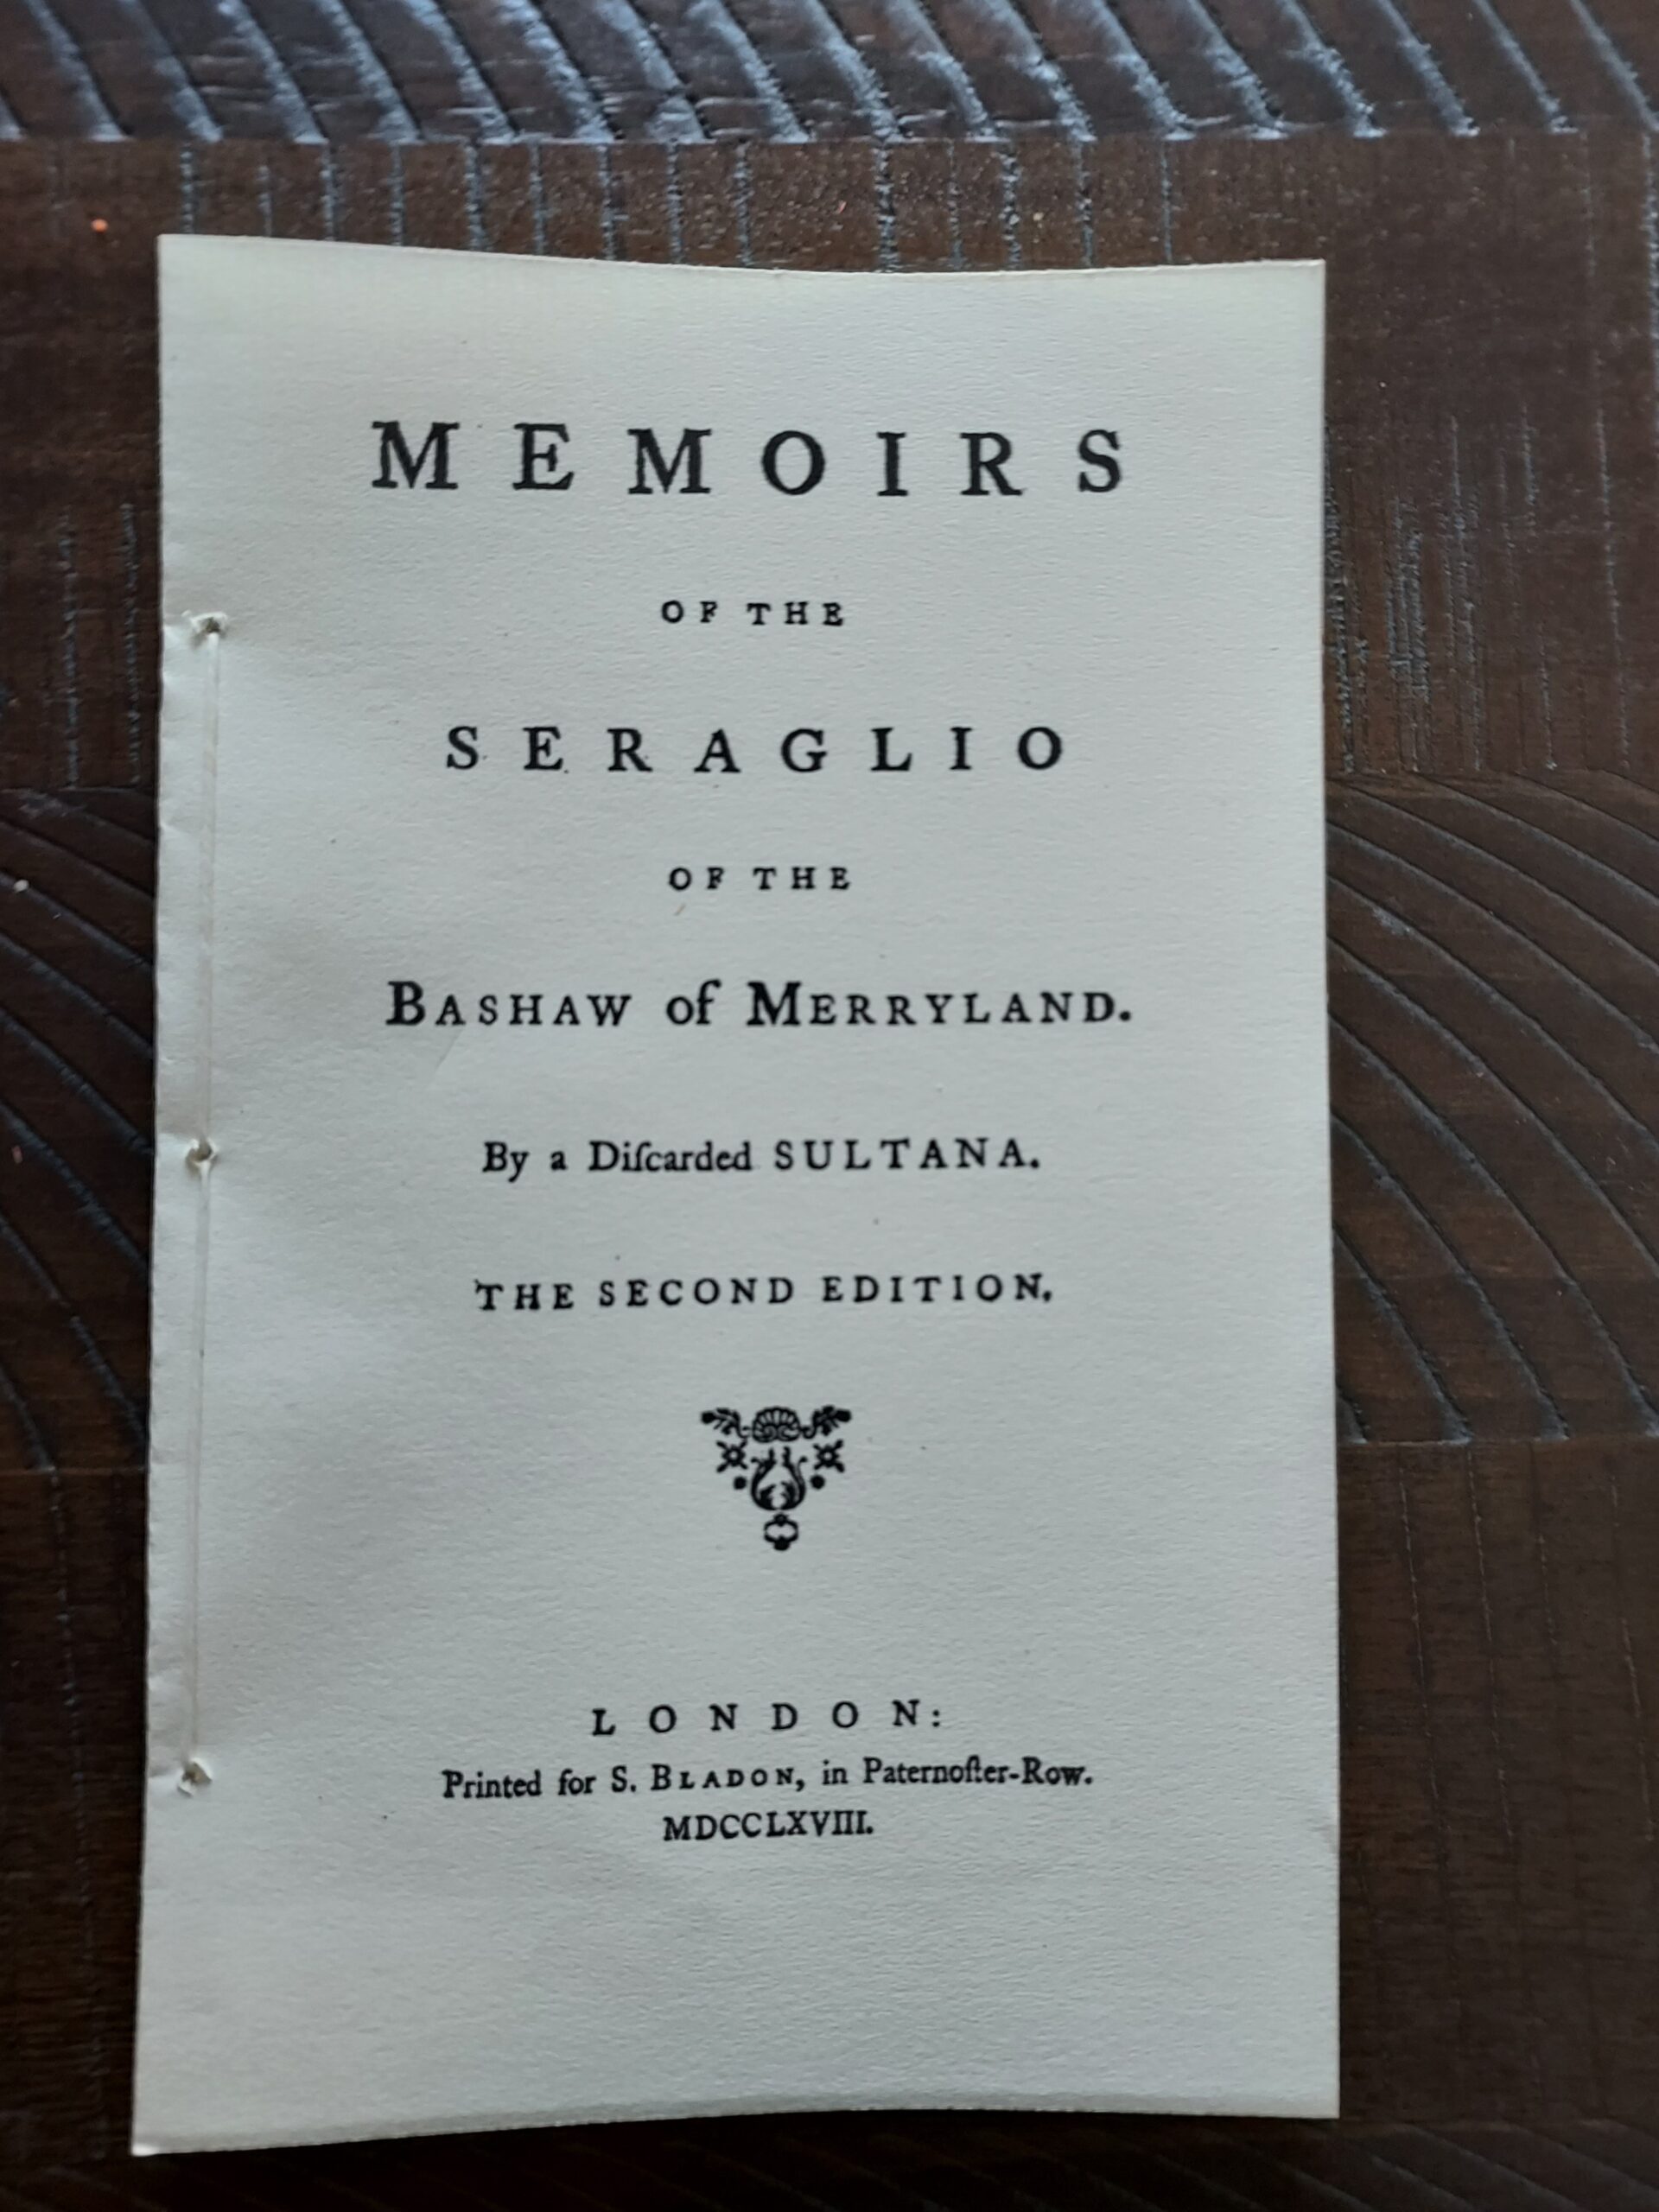 Memoirs of the Seraglio of the Bashaw of Merryland